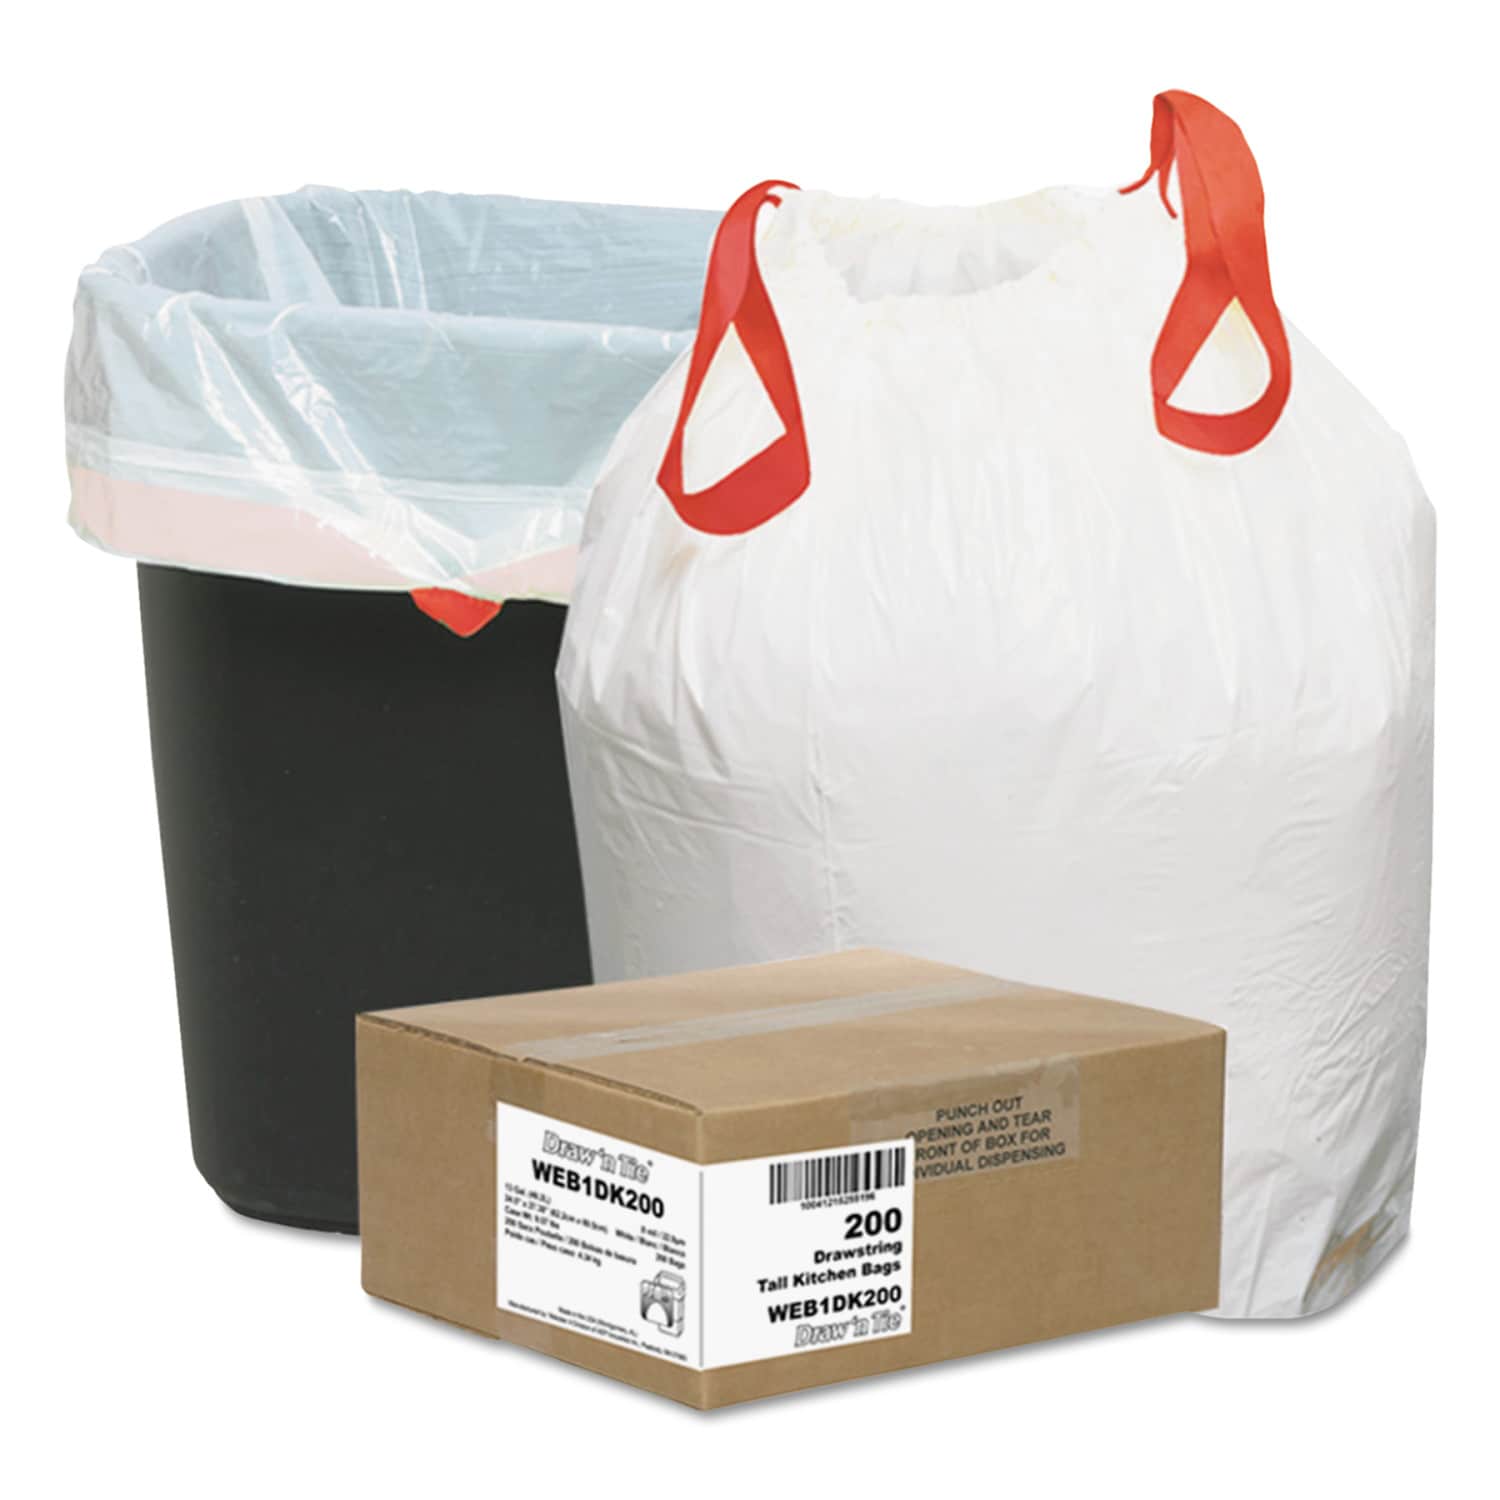 Plasticplace 13 Gallon Drawstring Trash Bags - White (200 Count